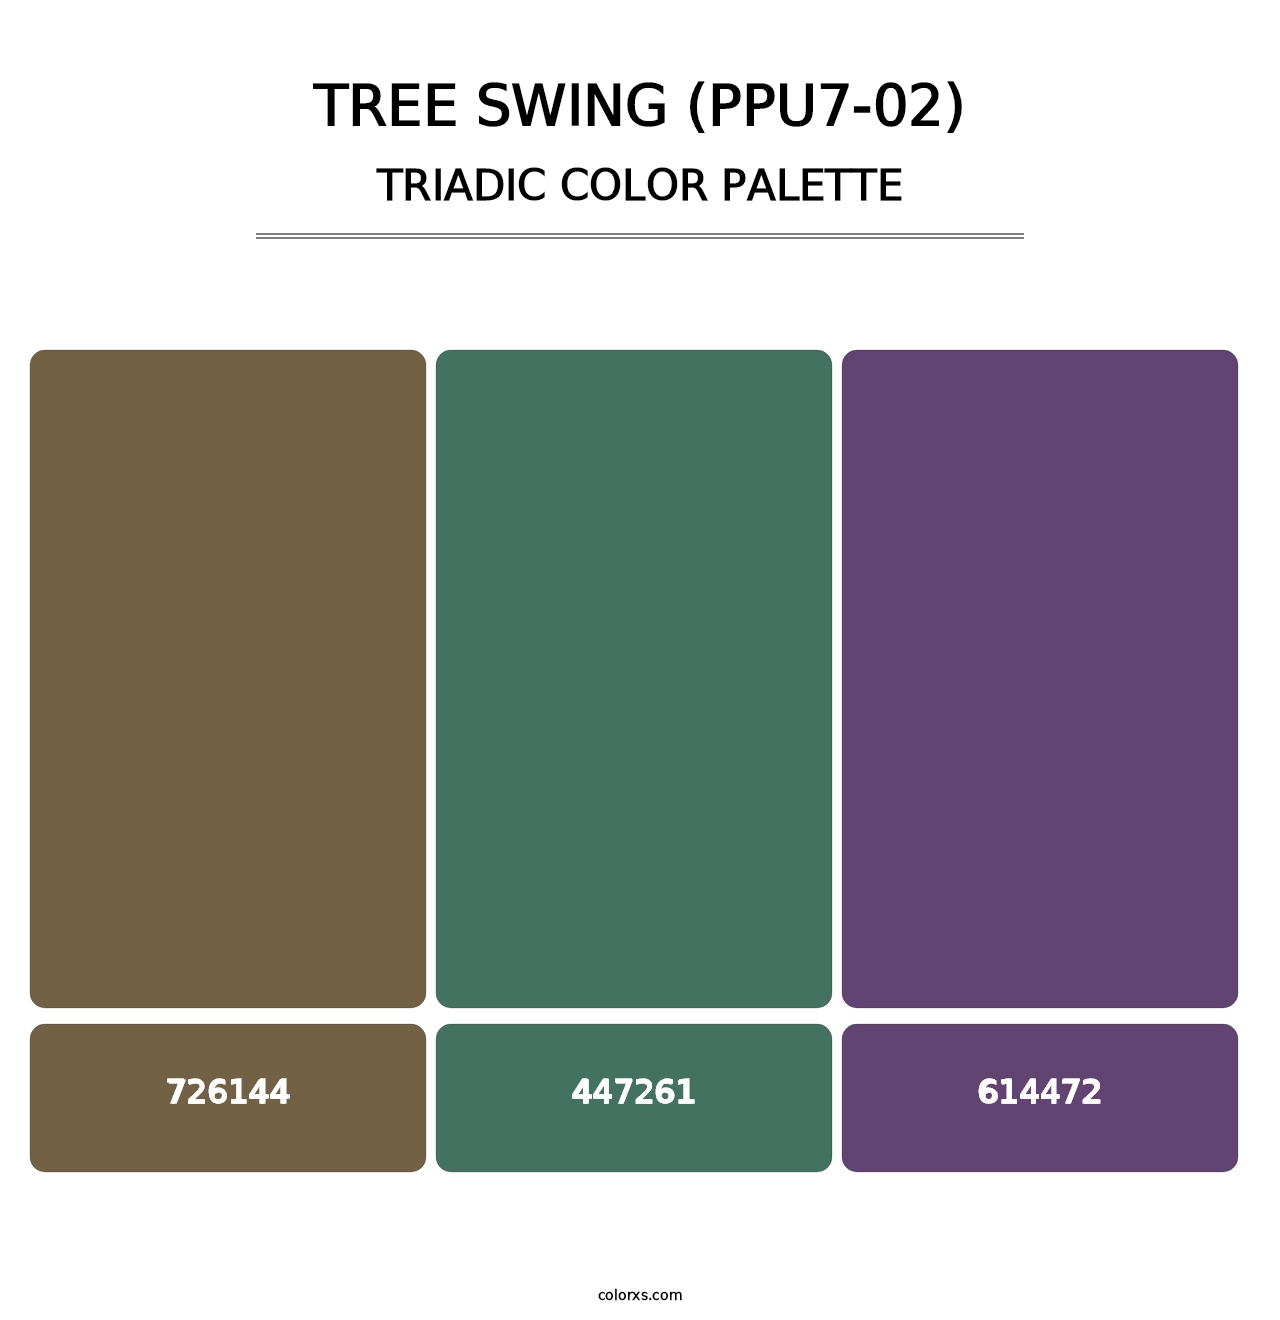 Tree Swing (PPU7-02) - Triadic Color Palette